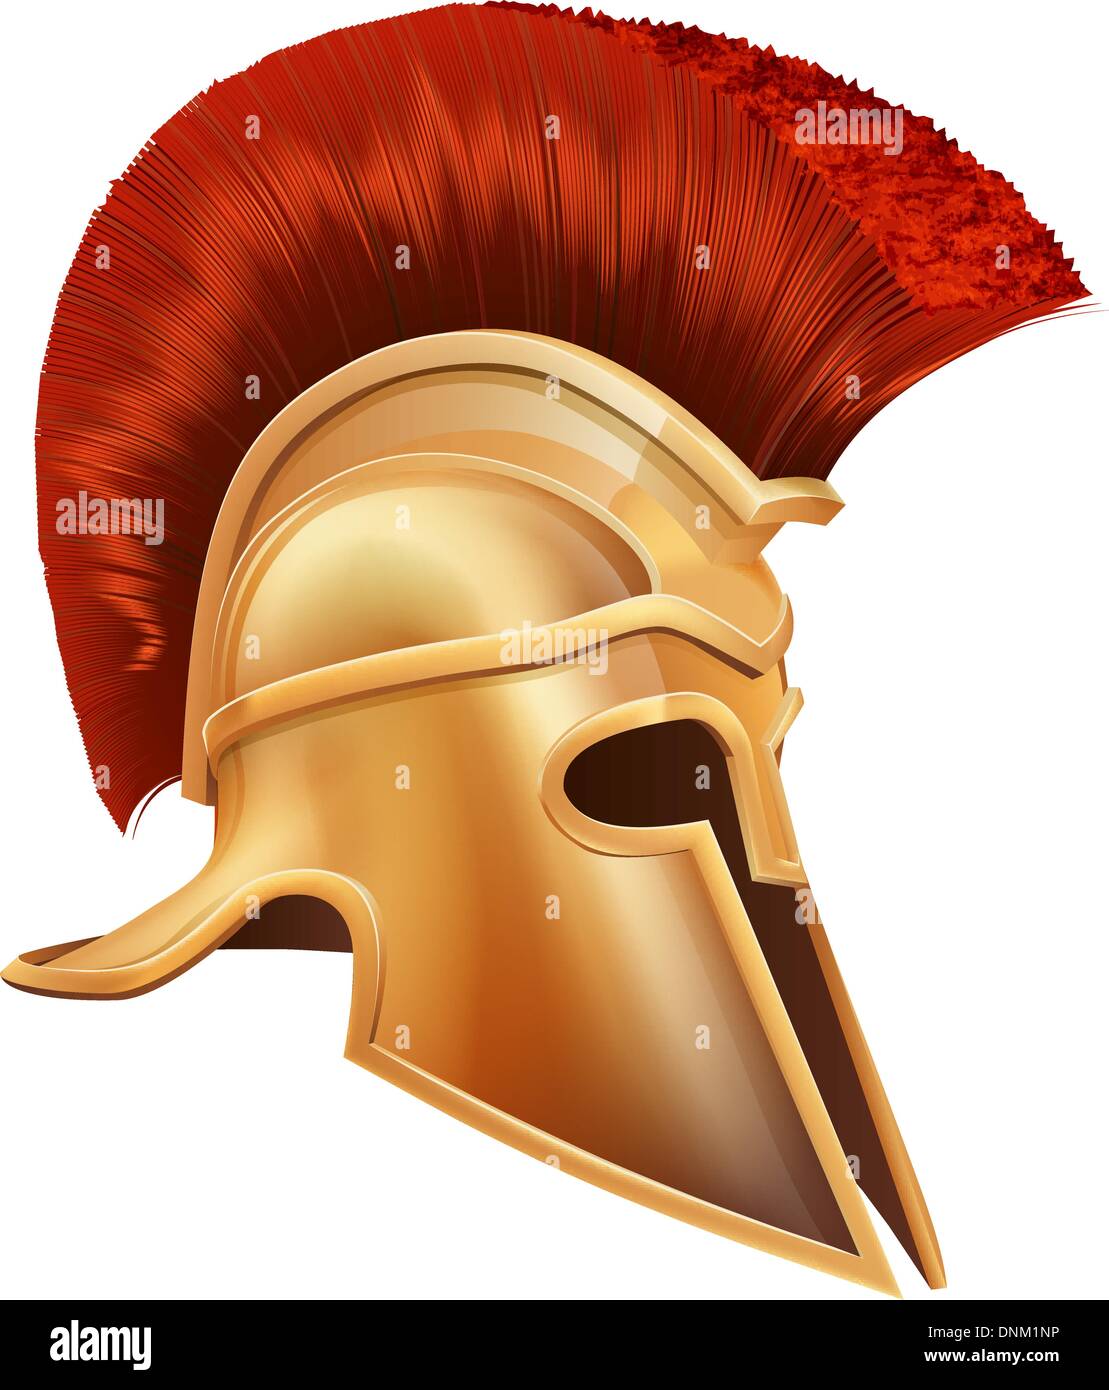 Illustration of an ancient Greek Warrior helmet, Spartan helmet, Roman helmet or Trojan helmet. Stock Vector